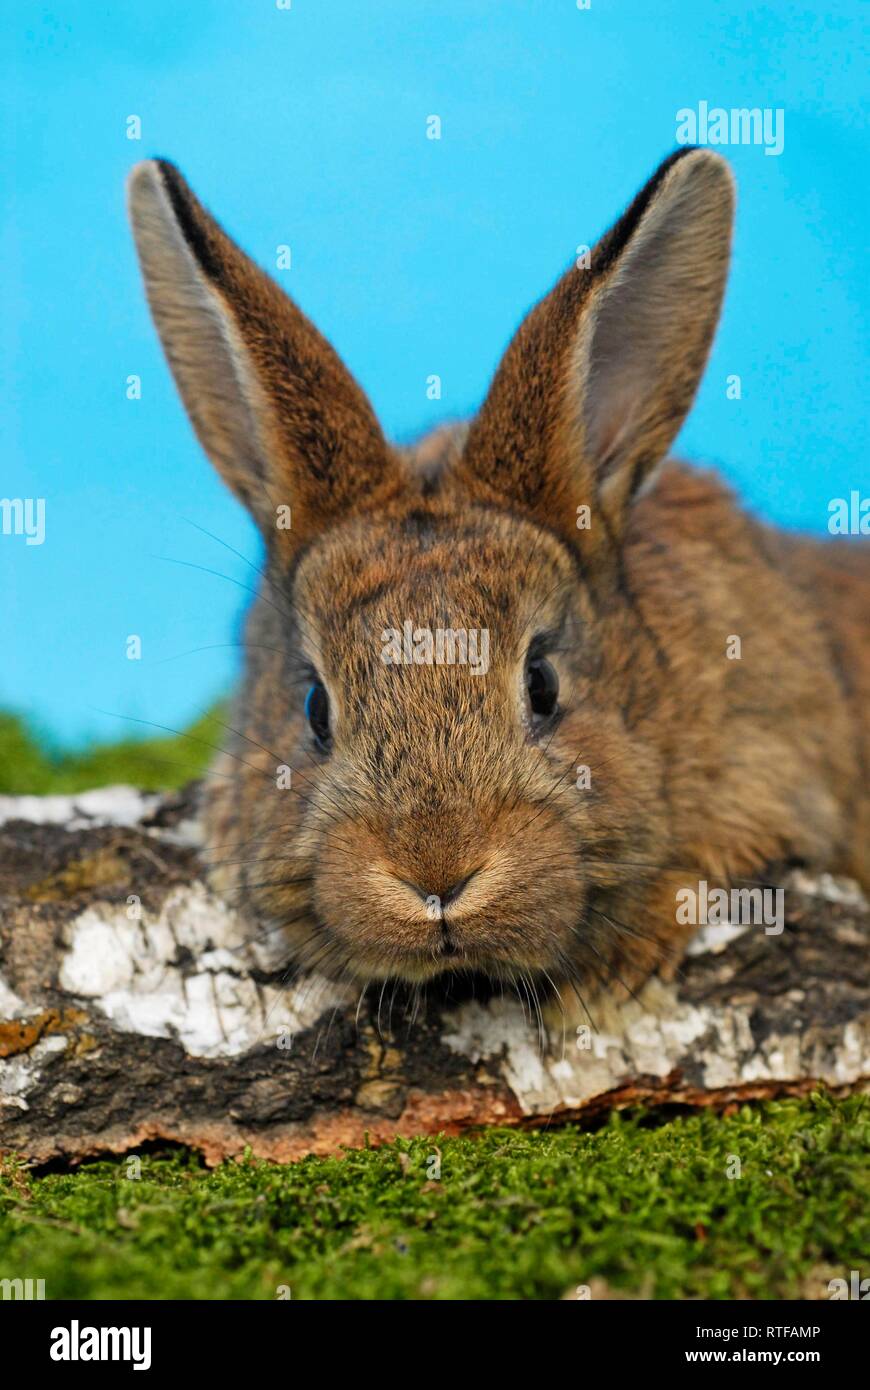 Dwarf rabbit, wild coloured, young animal, animal portrait, Austria Stock Photo